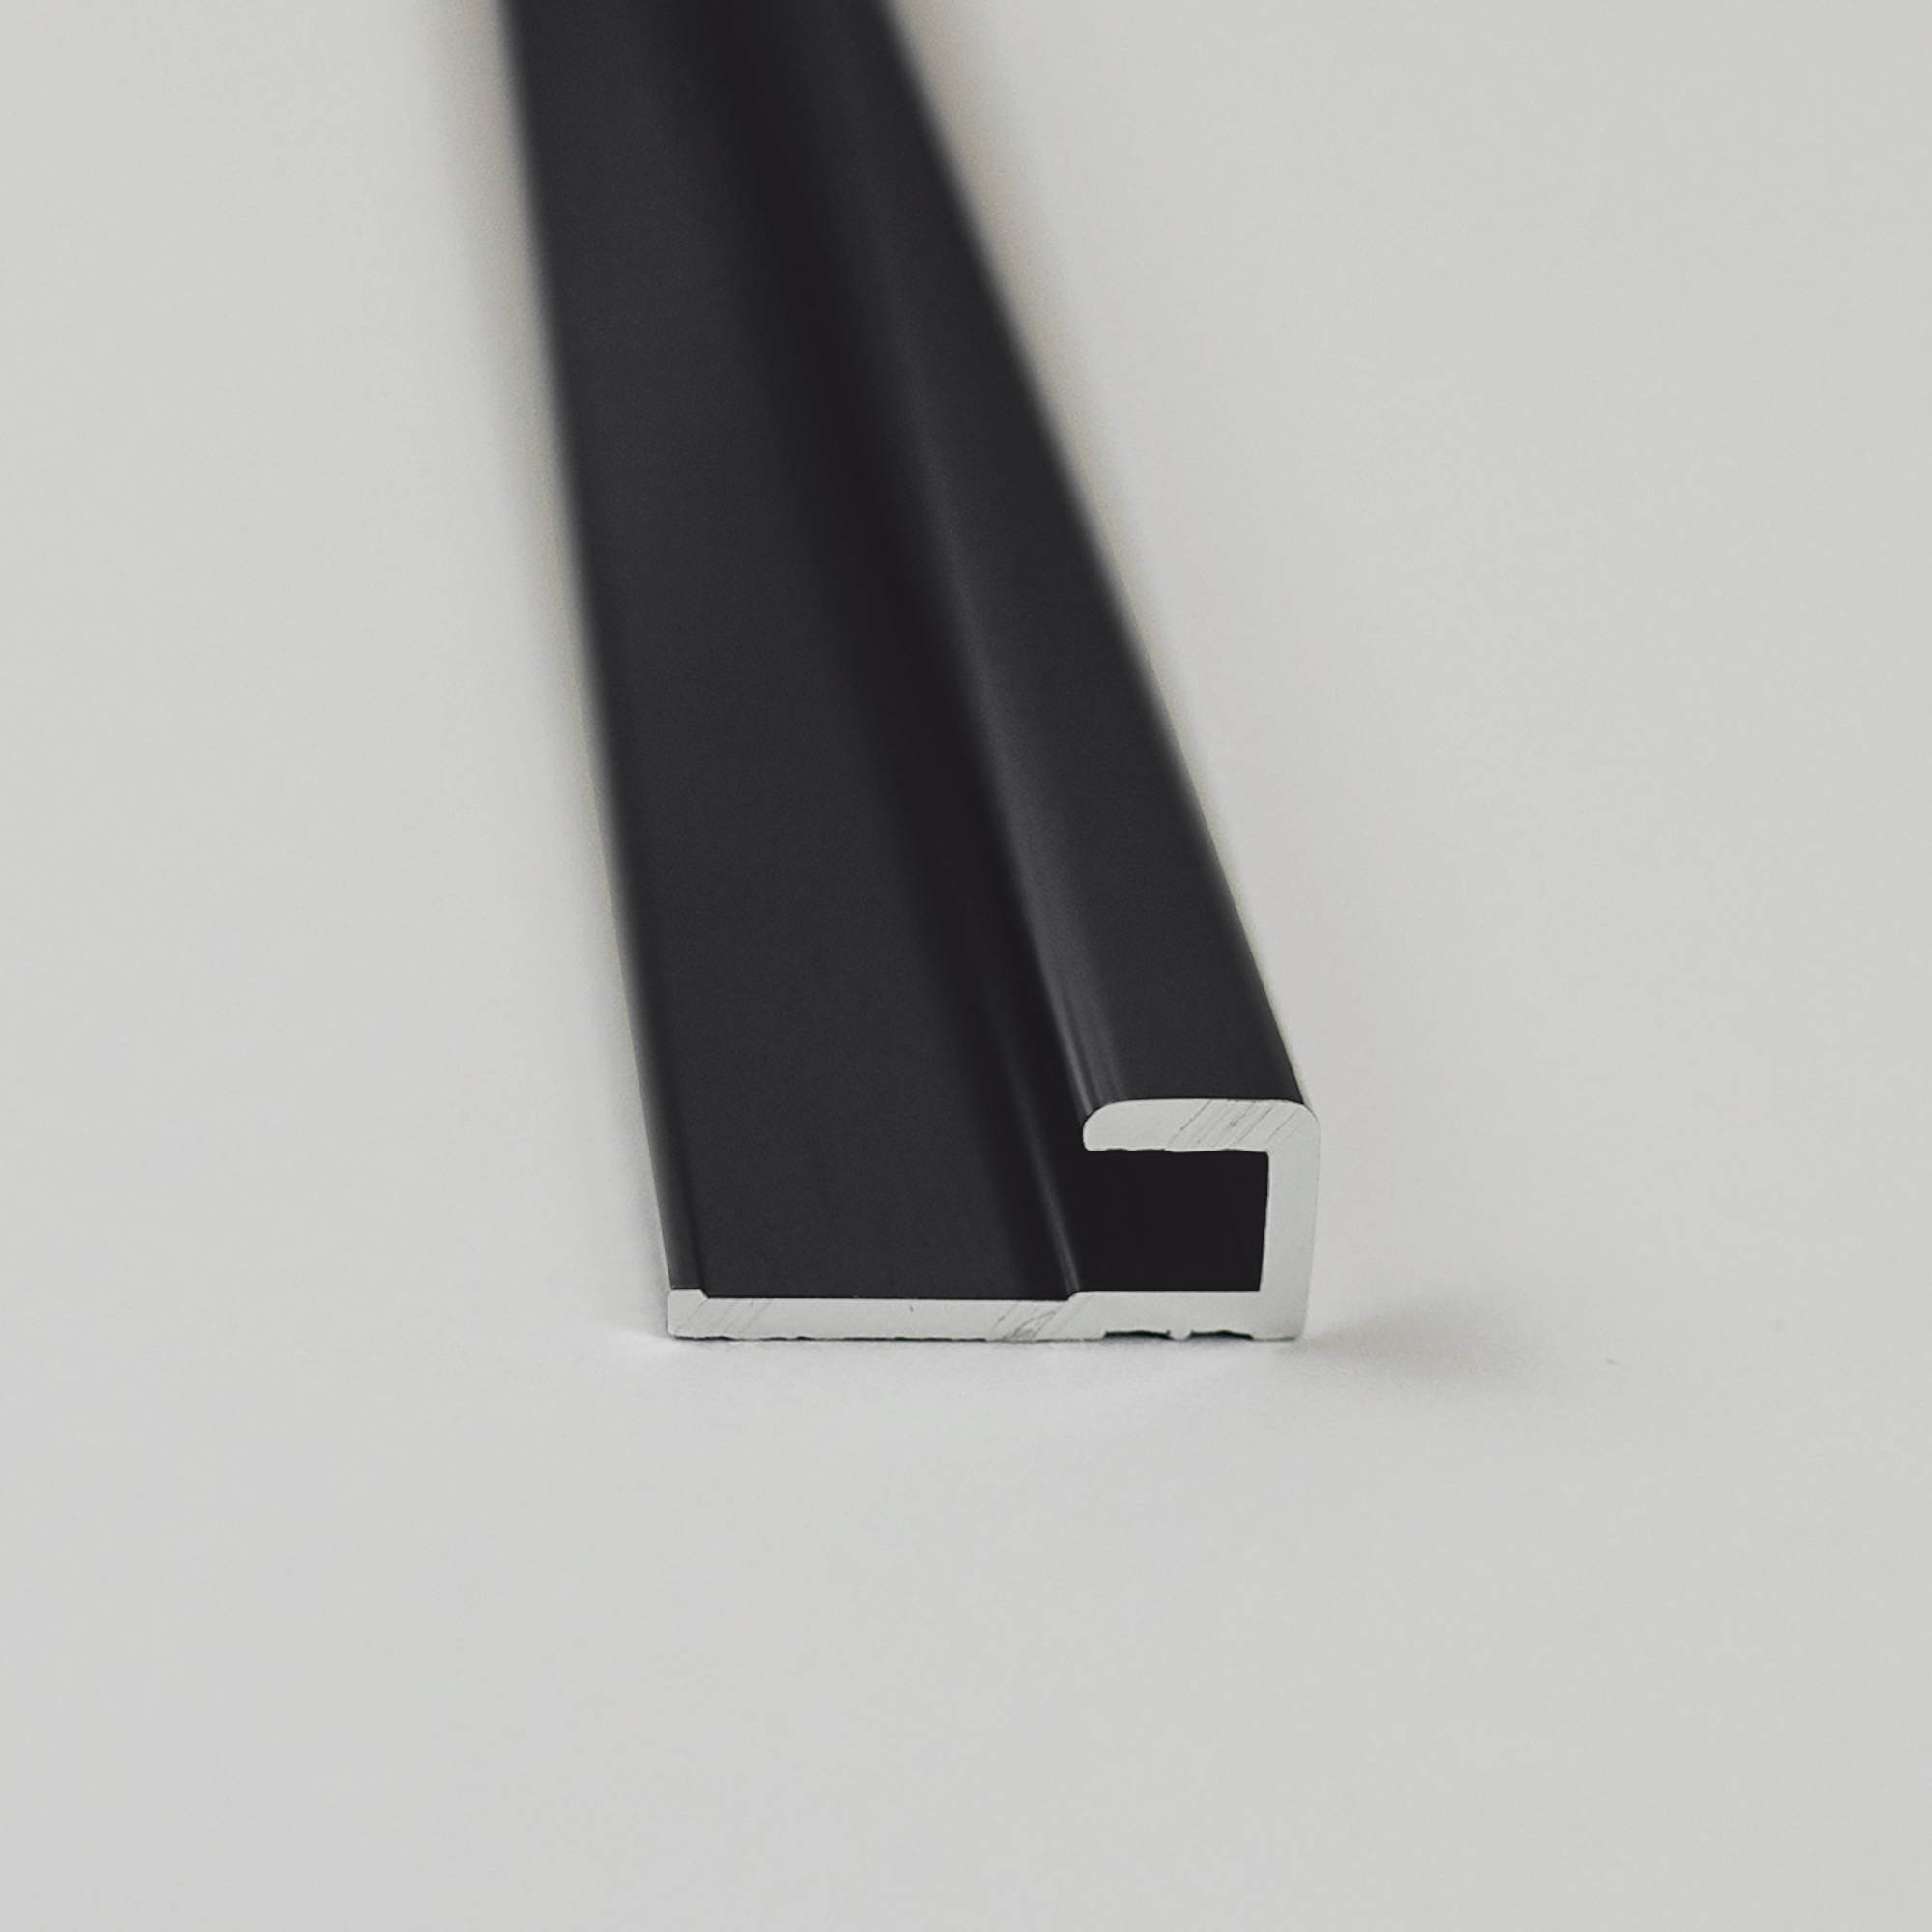 Abschlussprofil für Rückwandplatten, eckig, schwarz matt, 2100 mm + product picture